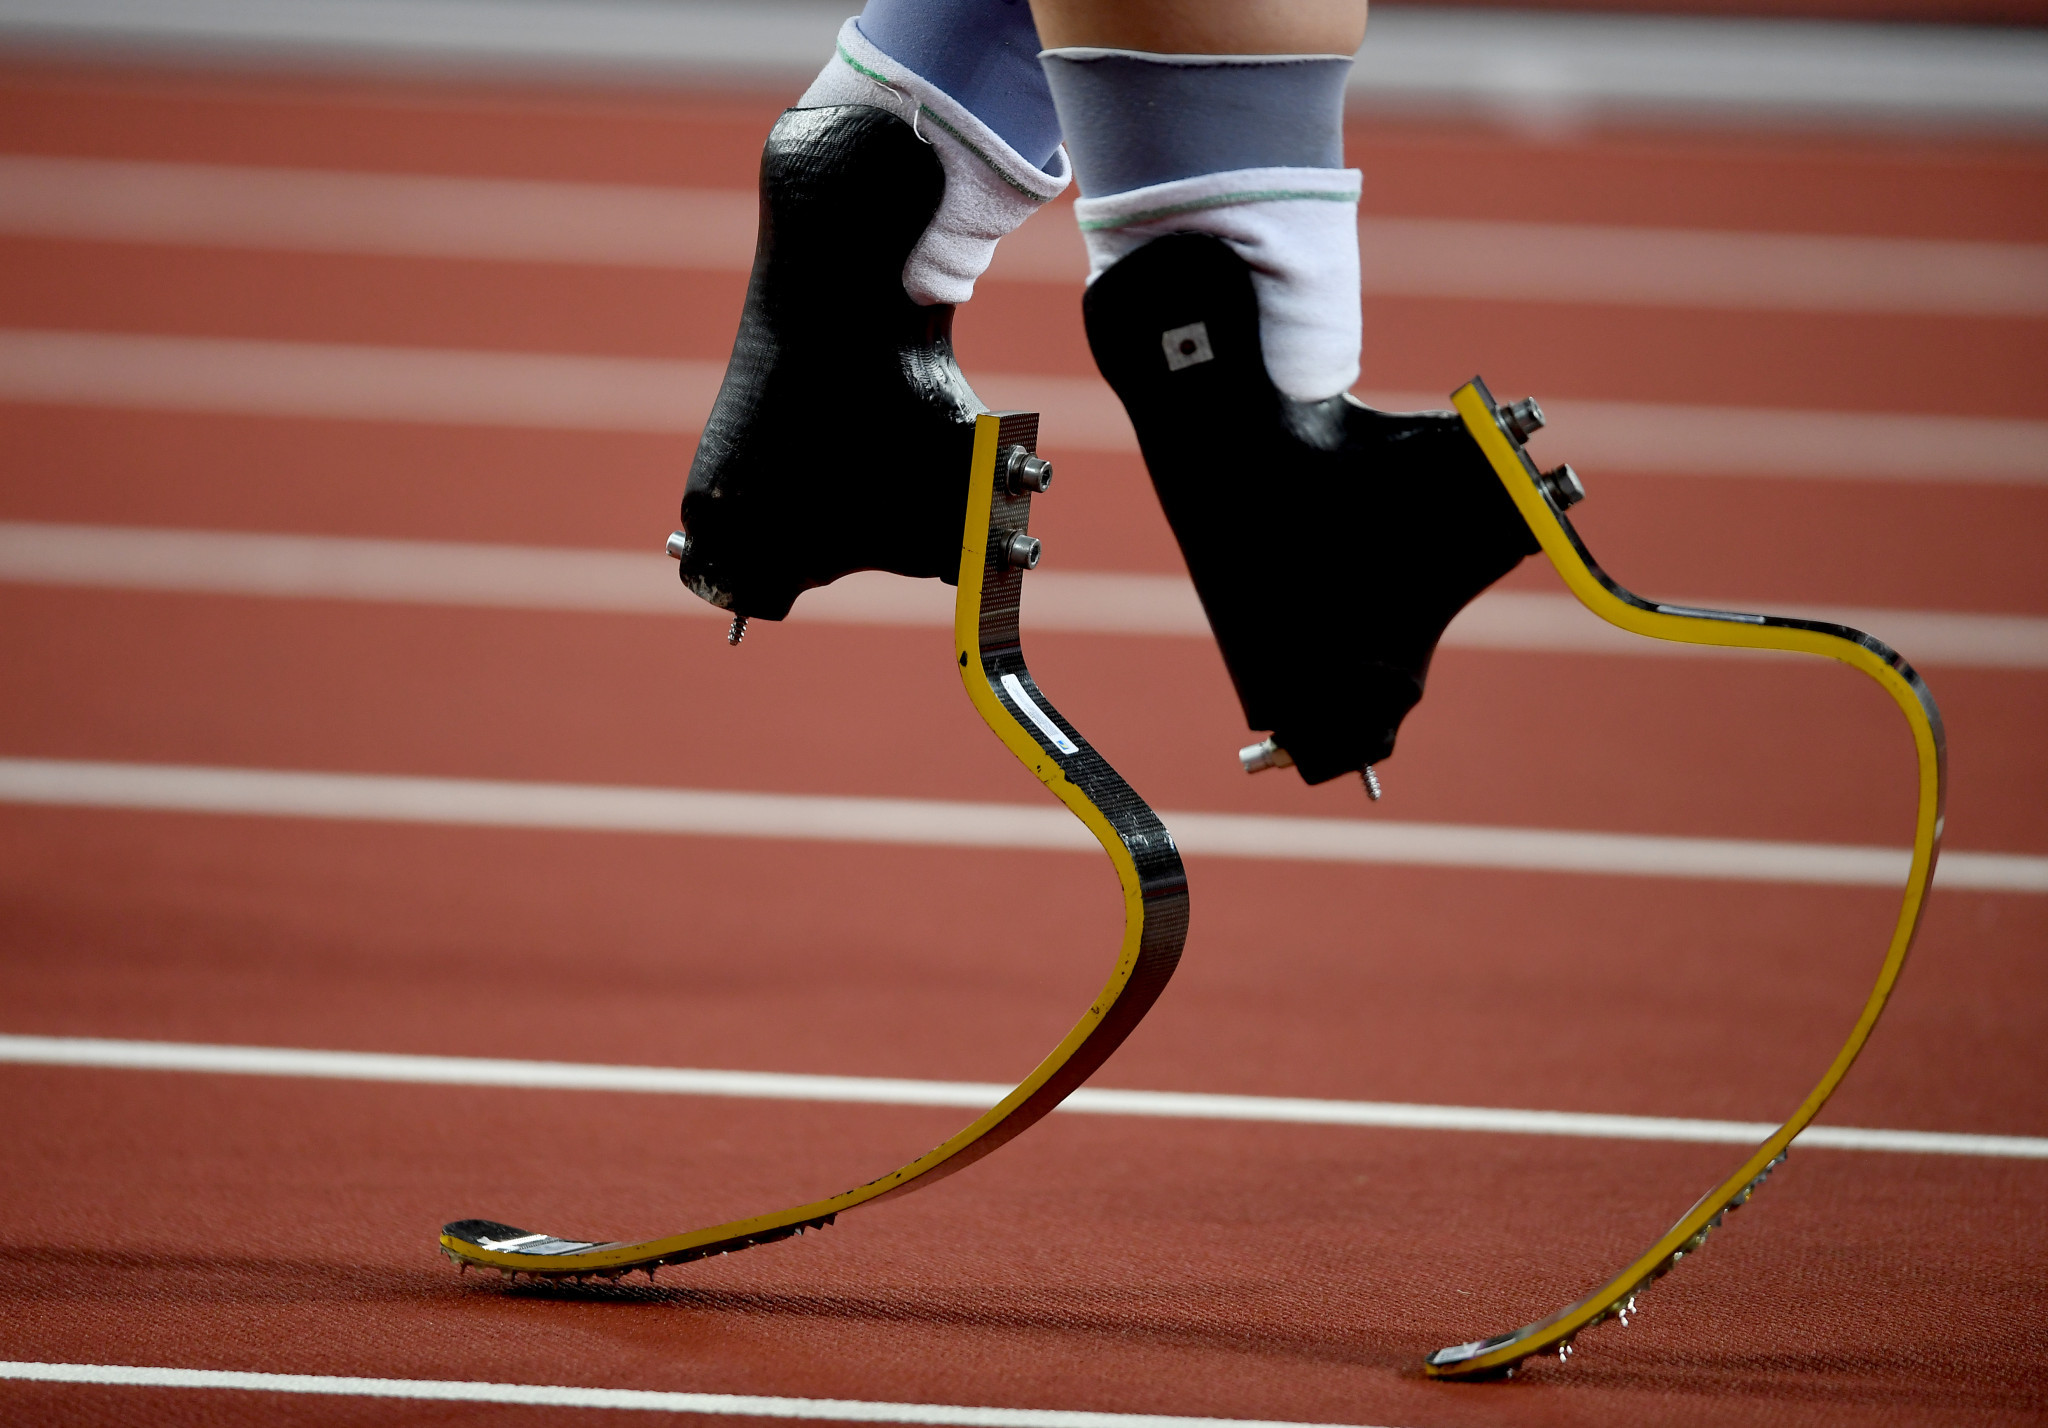 Athletics Australia could form Para sport equipment registry for next generation